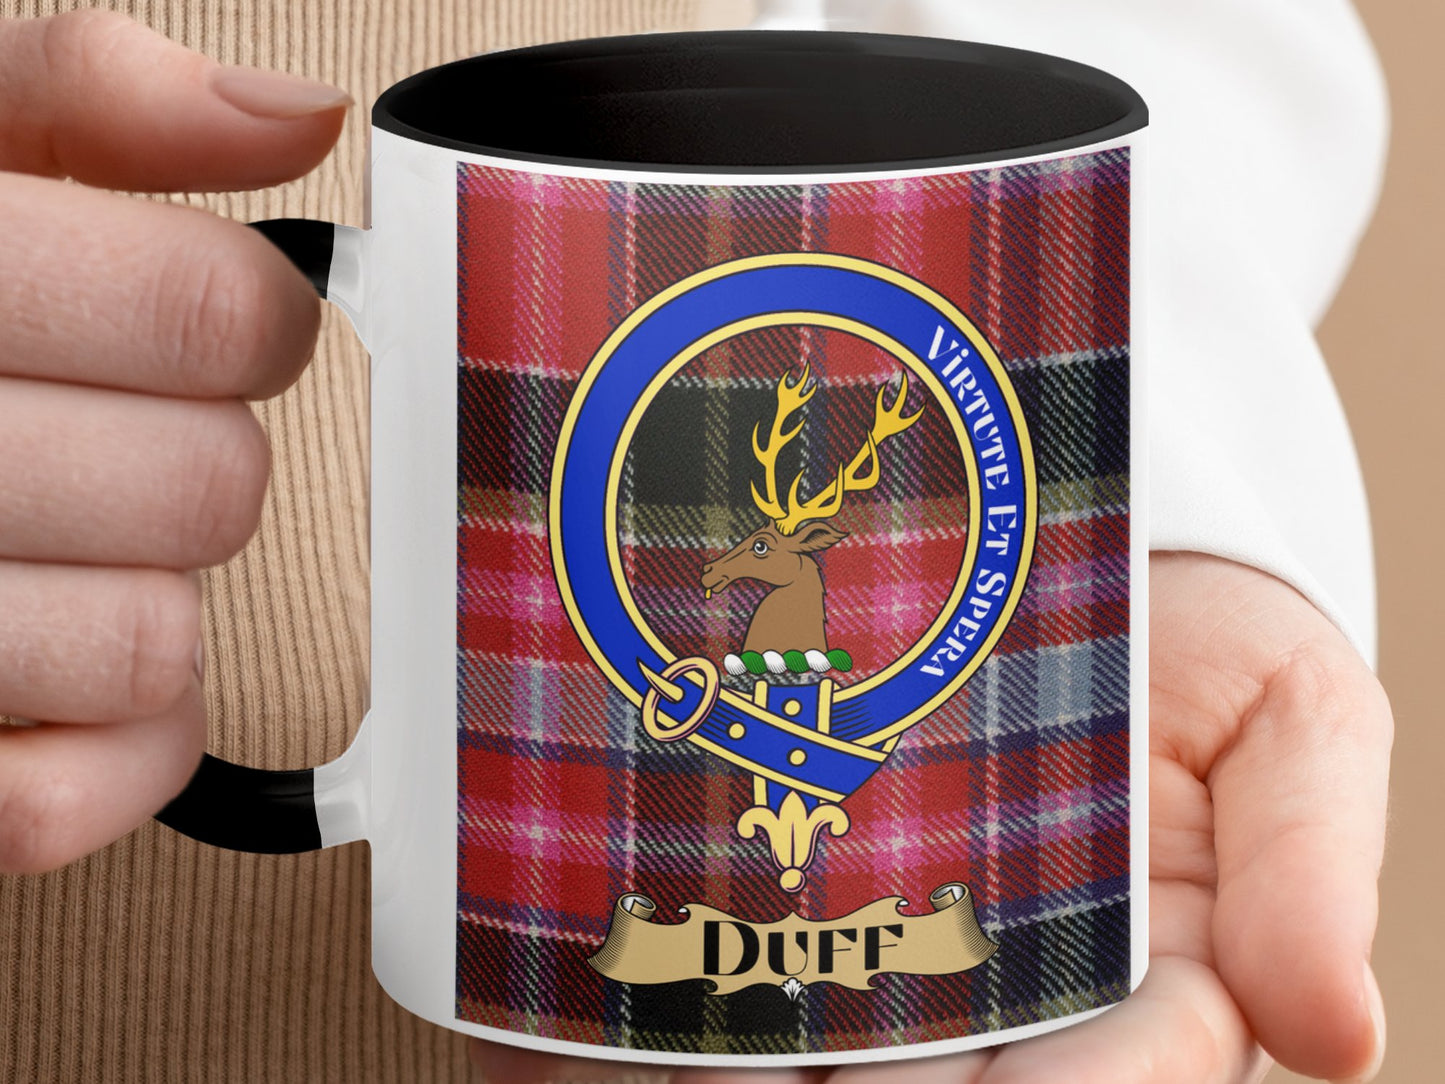 Clan Duff Scottish Tartan Crest Design Mug - Living Stone Gifts